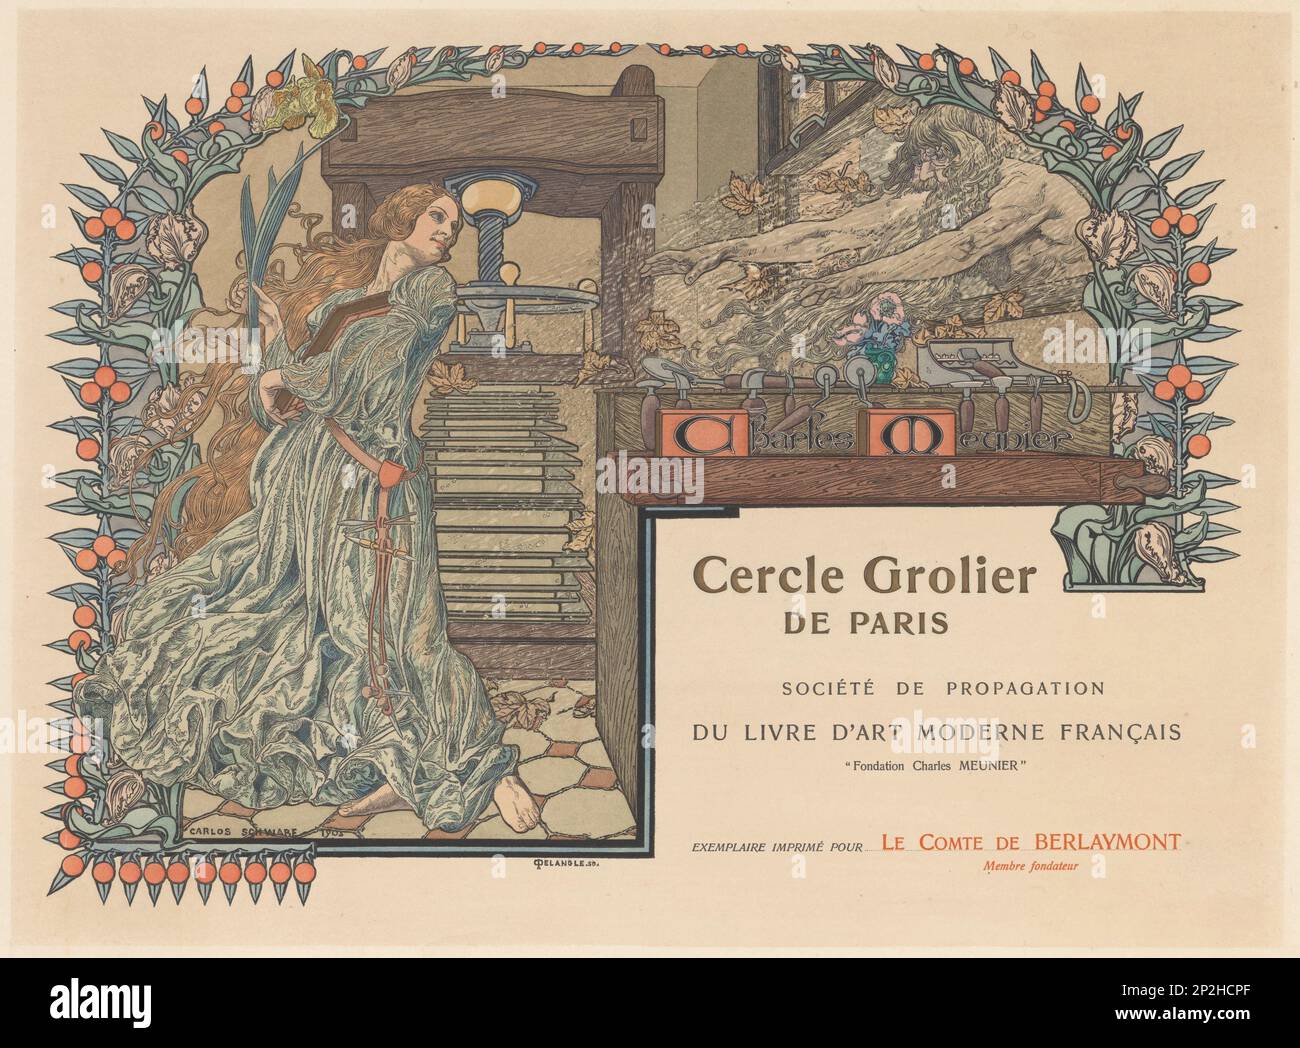 Cercle Grolier de Paris, 1903. Collezione privata. Foto Stock